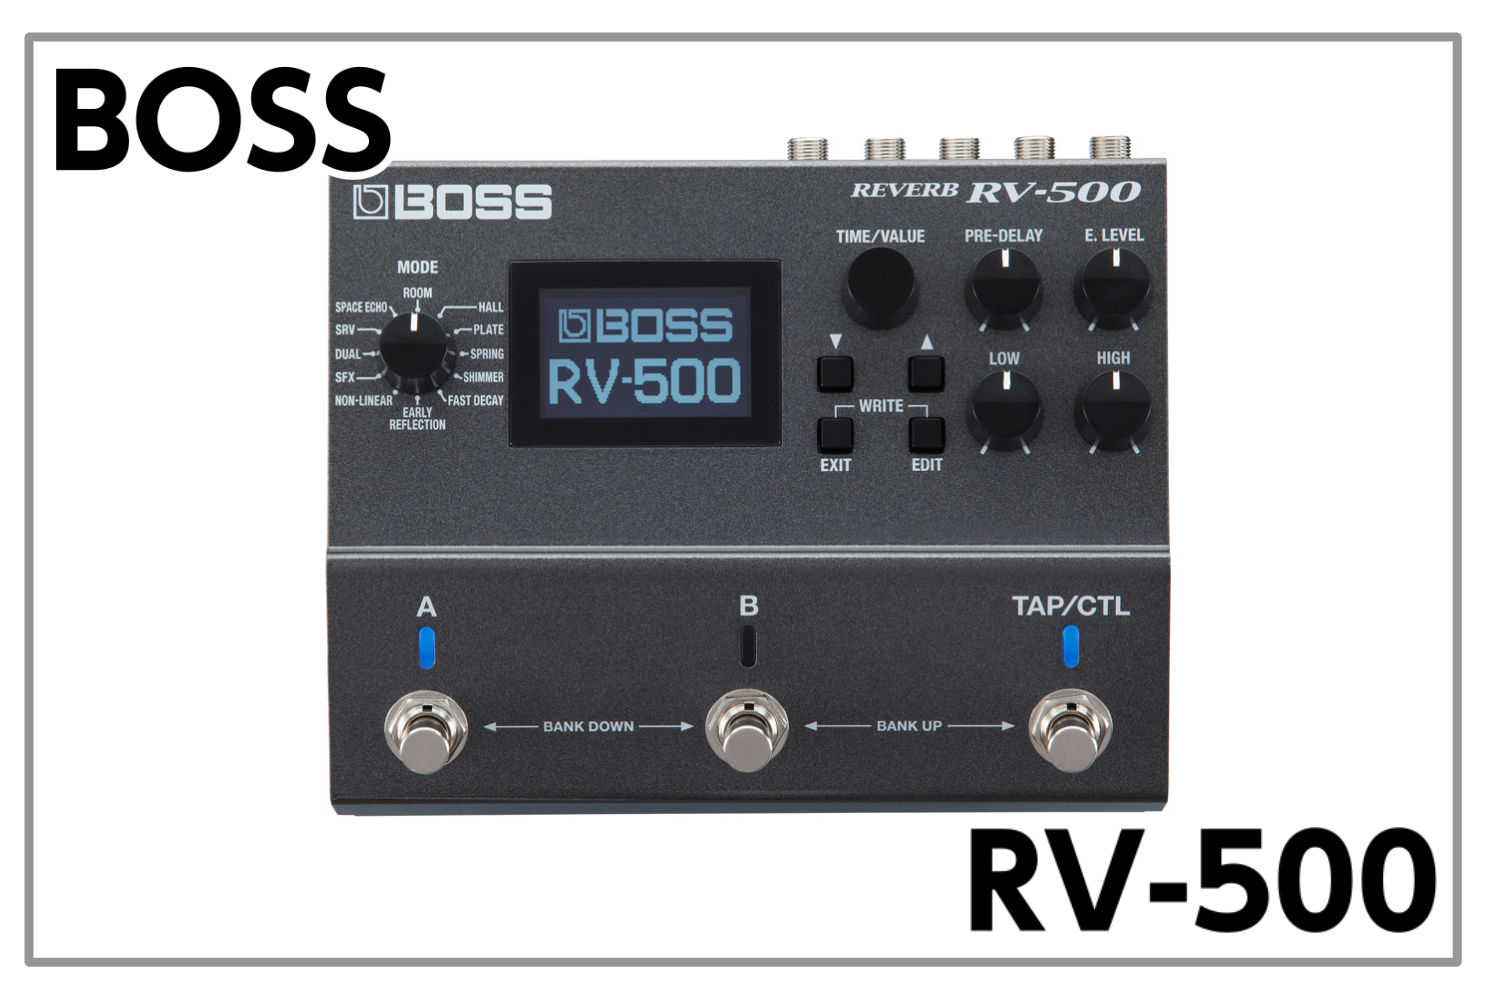 BOSS RV-500 展示 【多機能リバーブ】